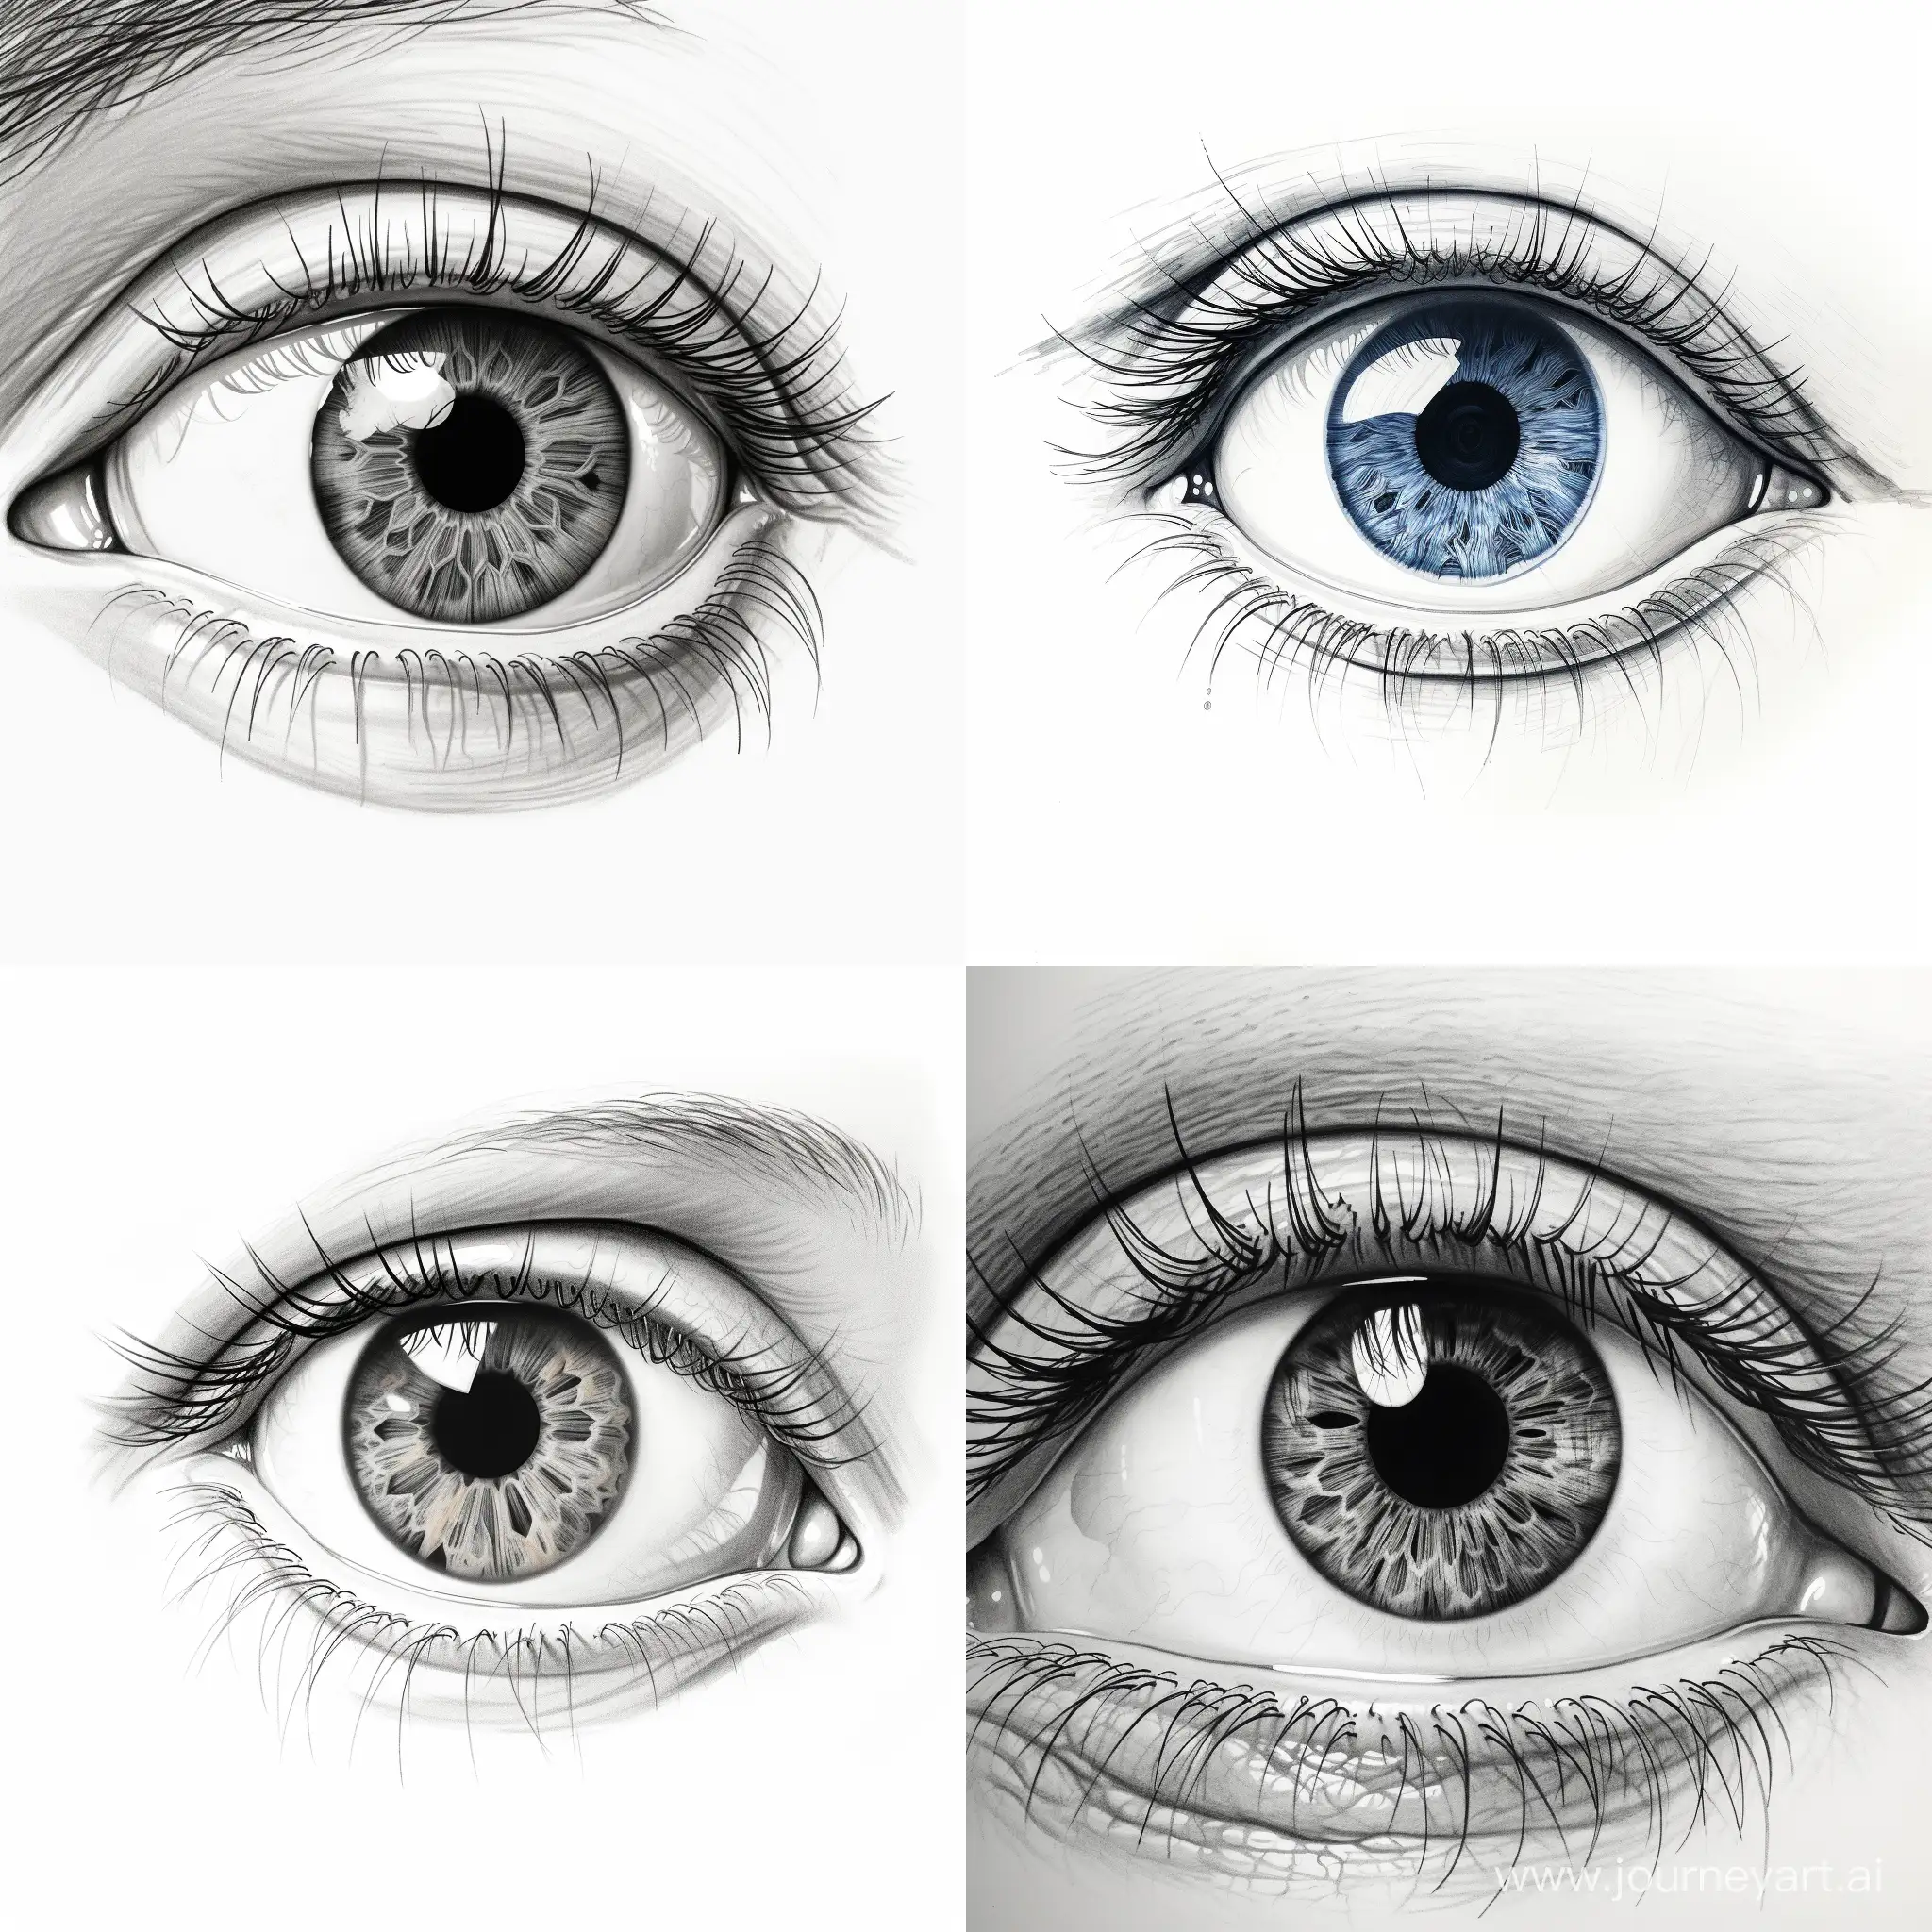 eye 2D images drawn freehand digitally